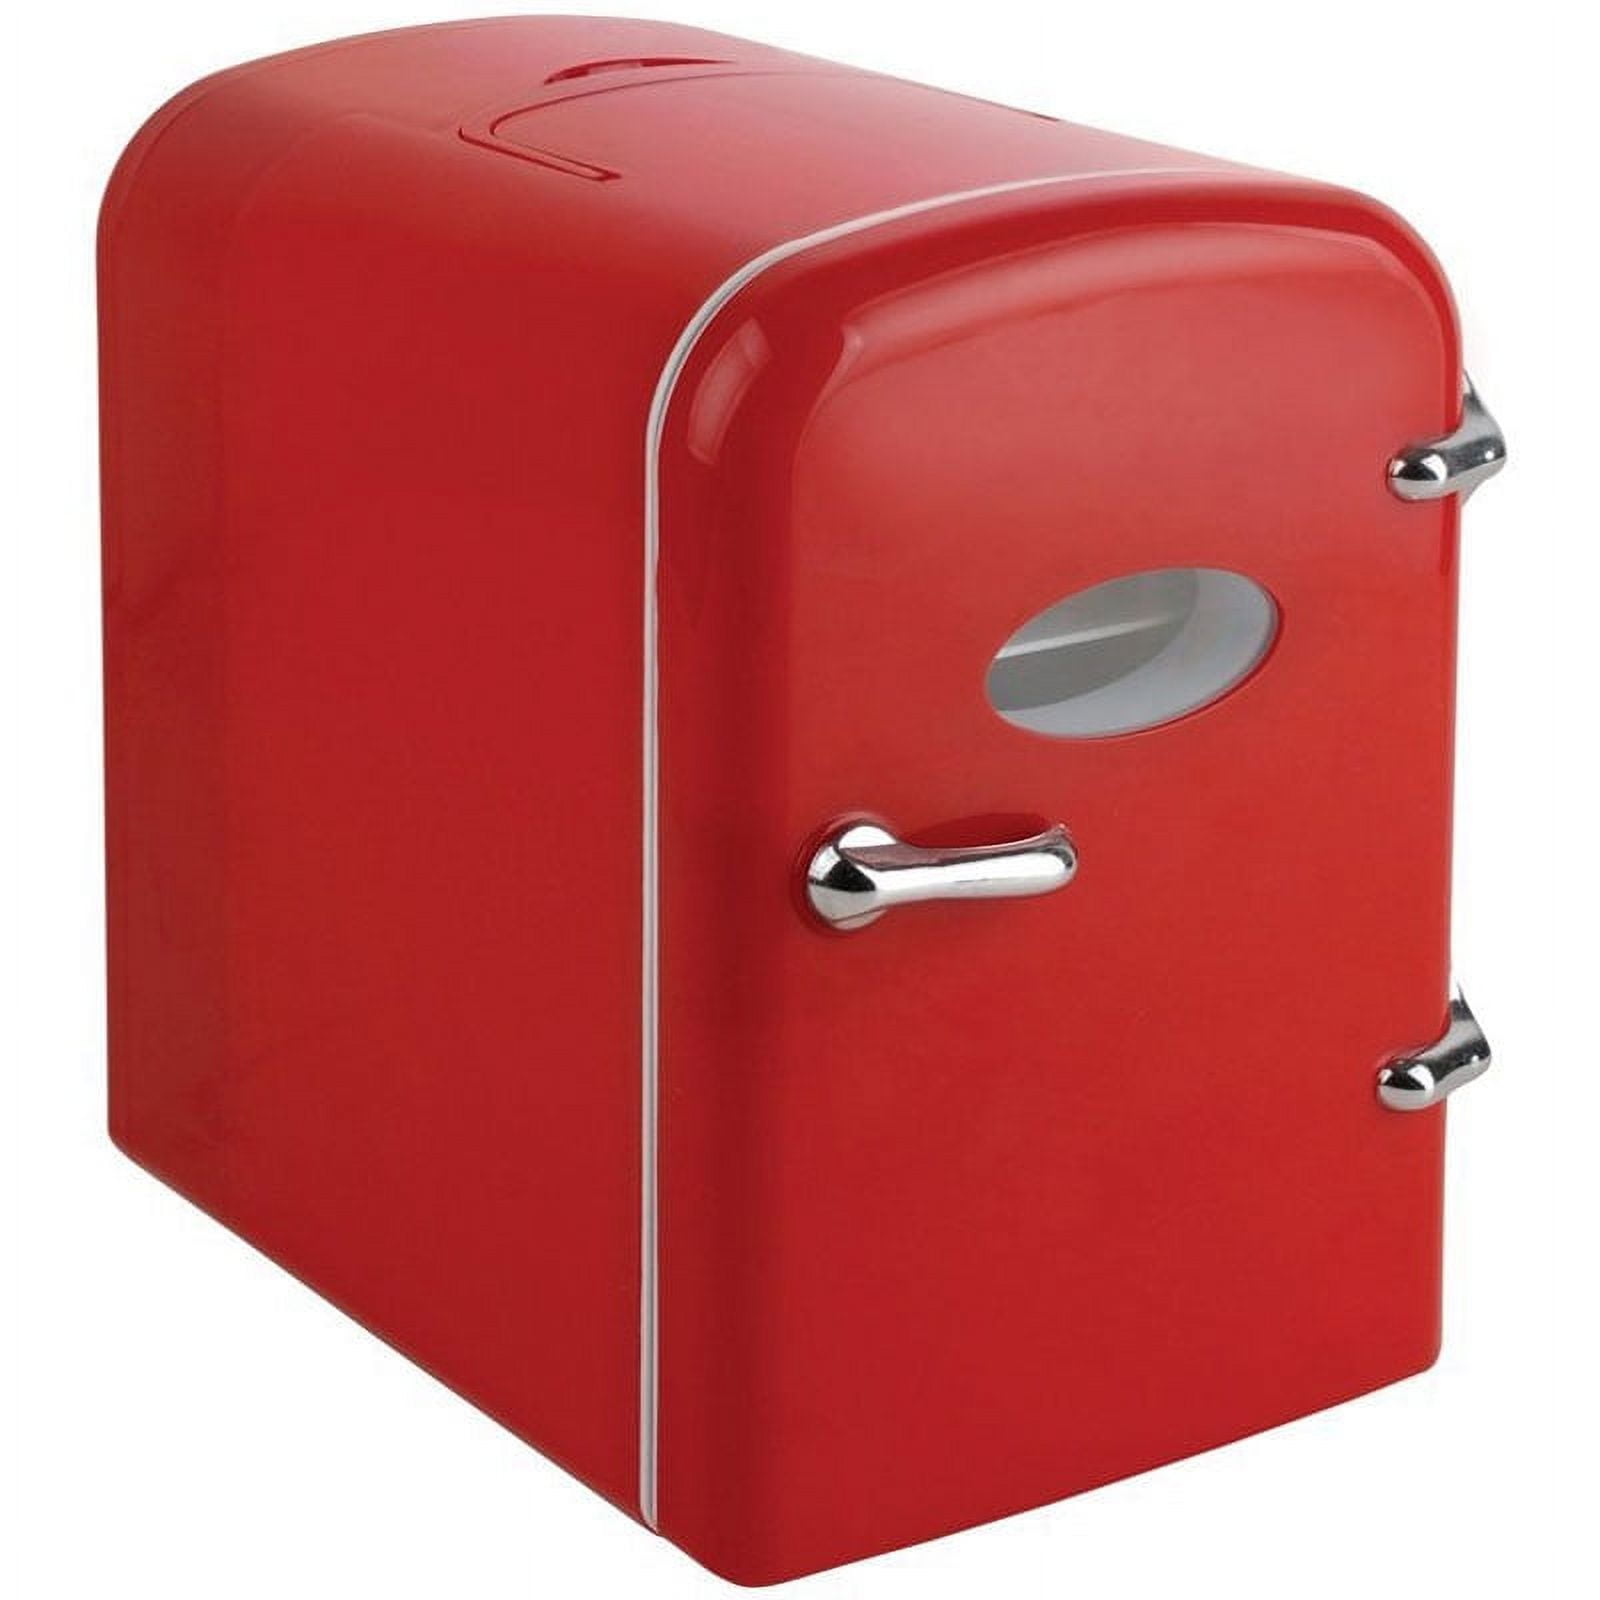 NIB Igloo Mini Fridge Beverage Refrigerator Home or Auto Red Holds 6 Cans  Retro